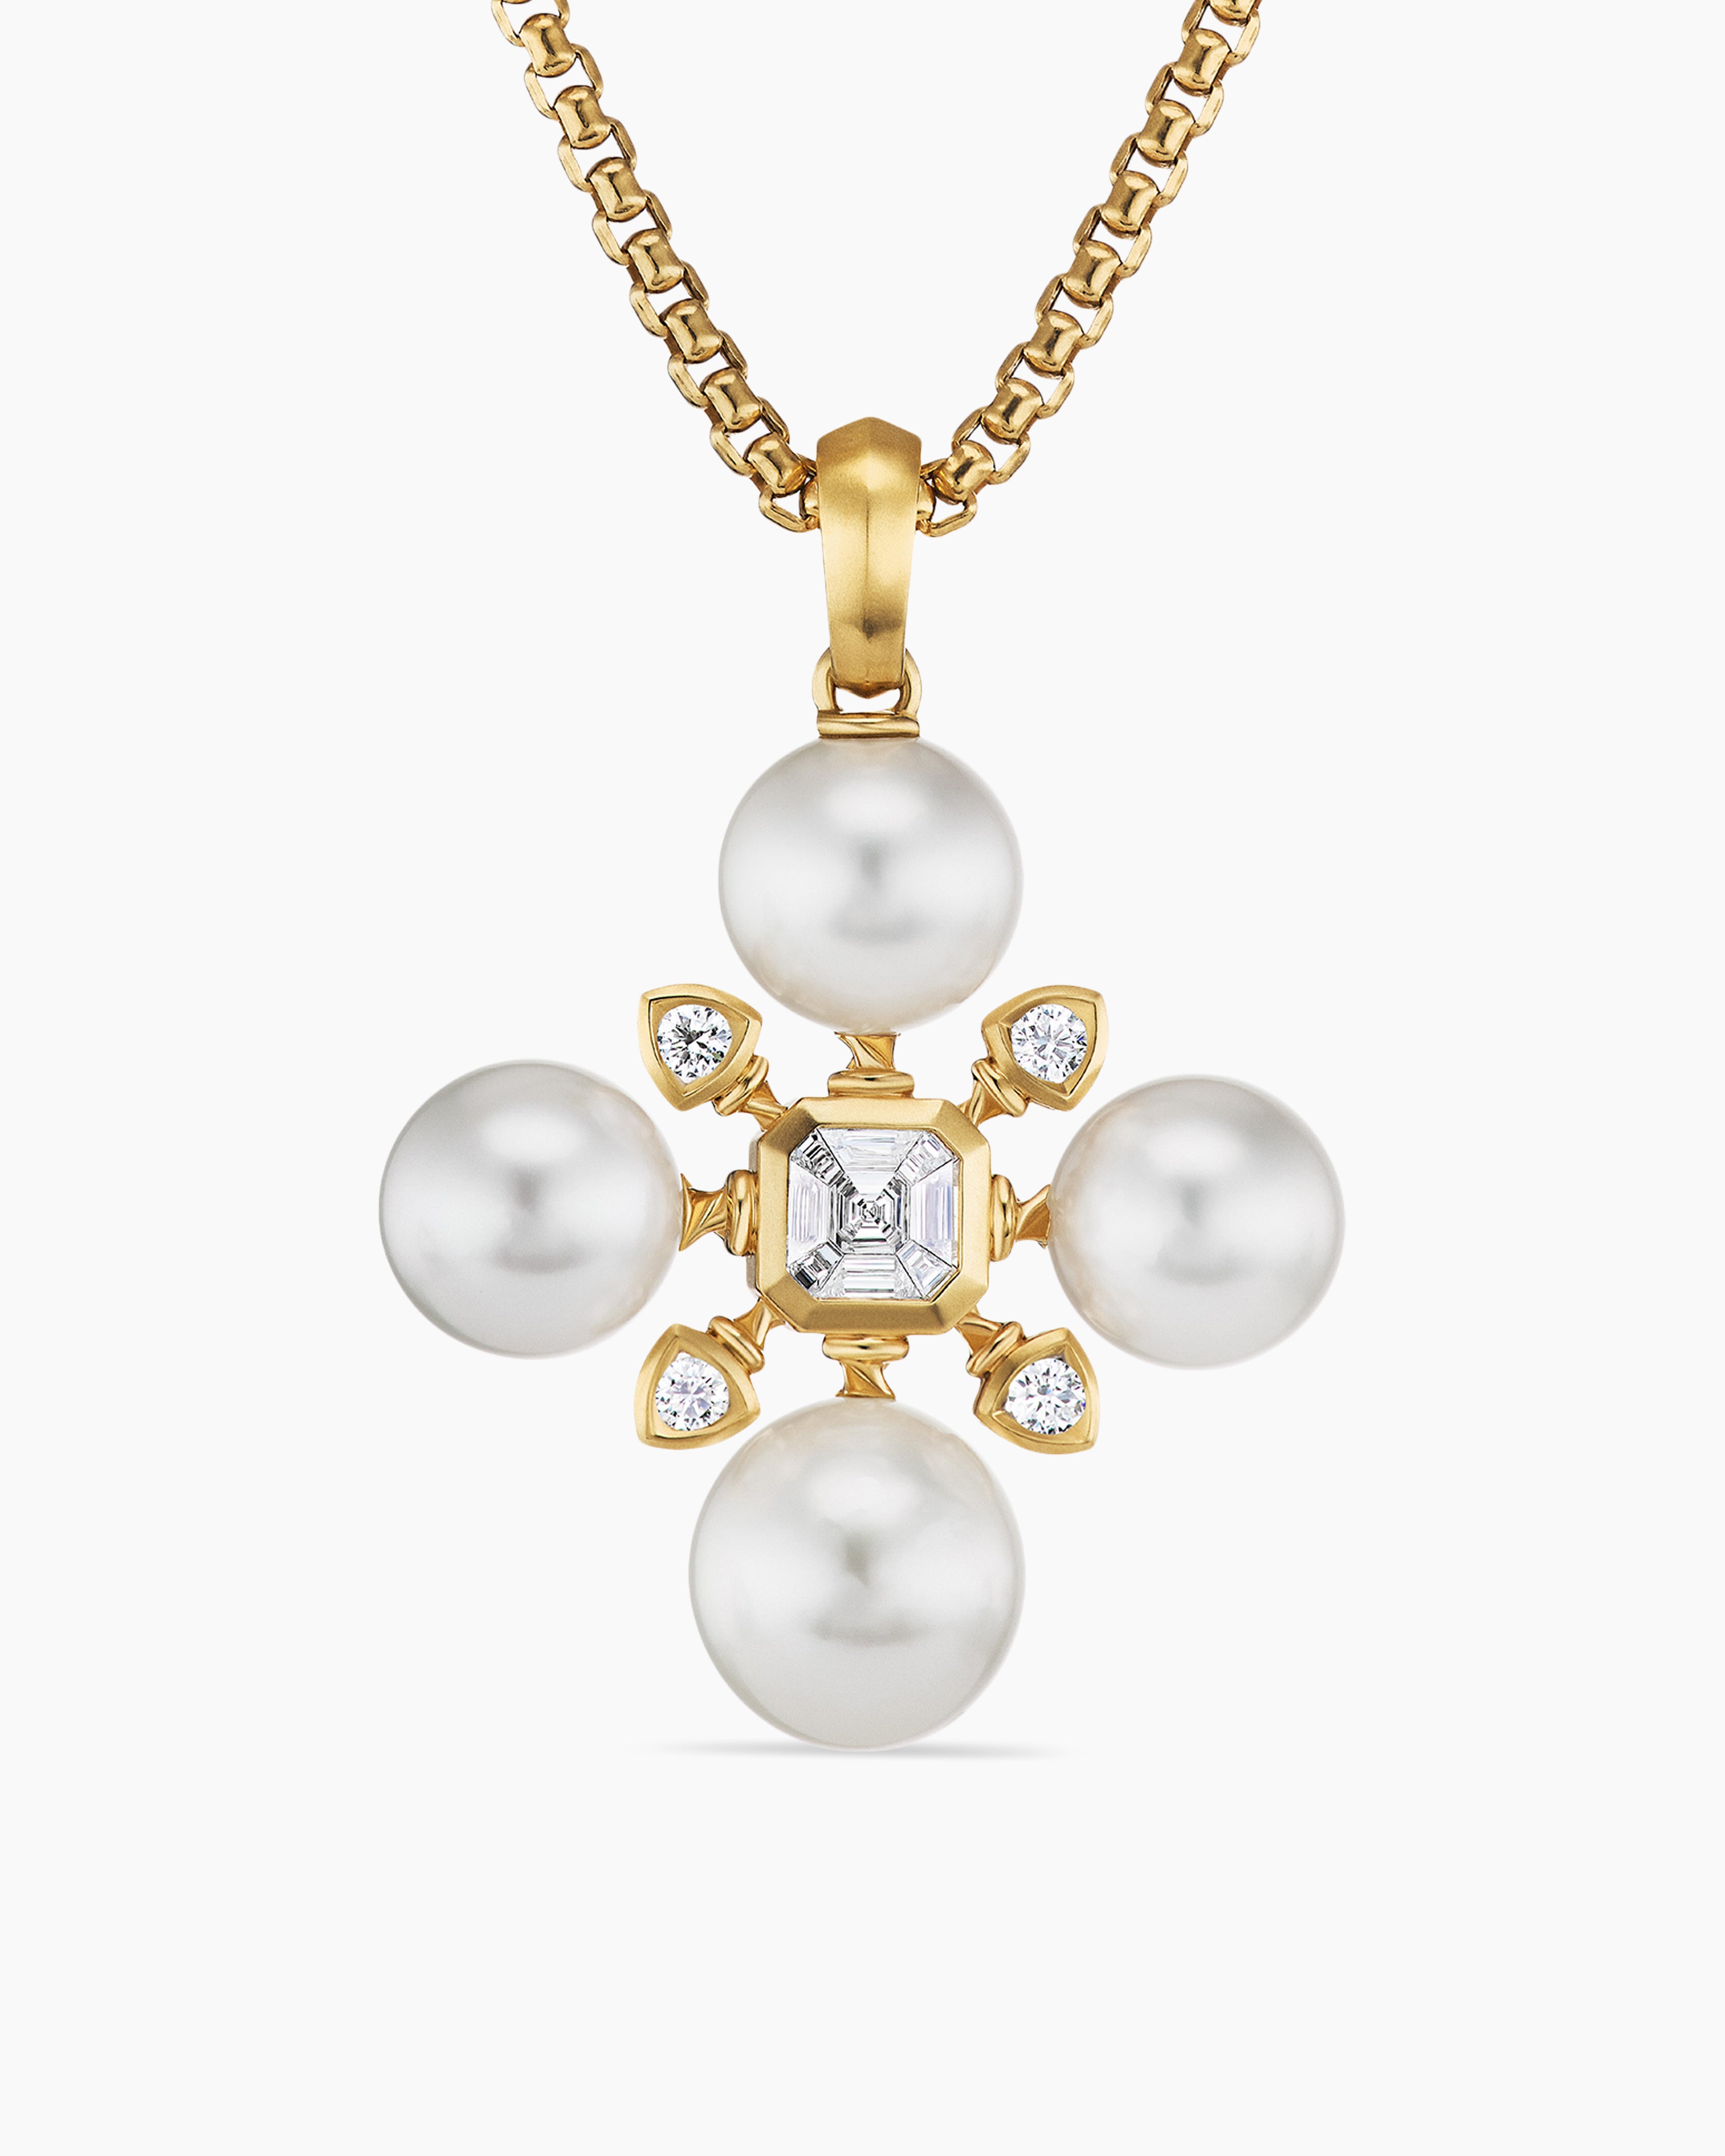 Renaissance Pearl Pendant in 18K Yellow Gold with Pearls and Diamonds,  44.5mm | David Yurman